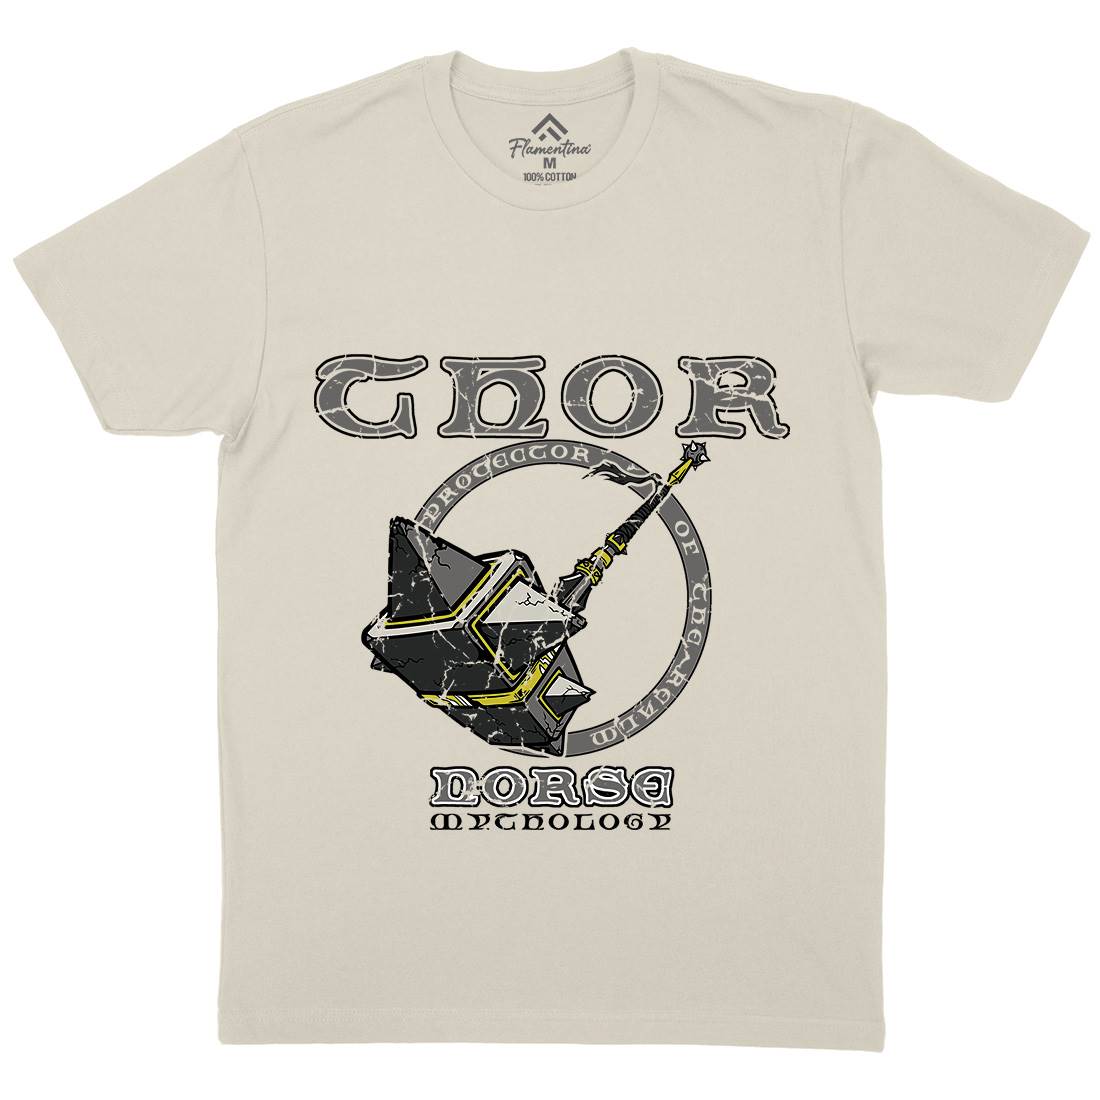 Thors Hammer Mens Organic Crew Neck T-Shirt Religion D130